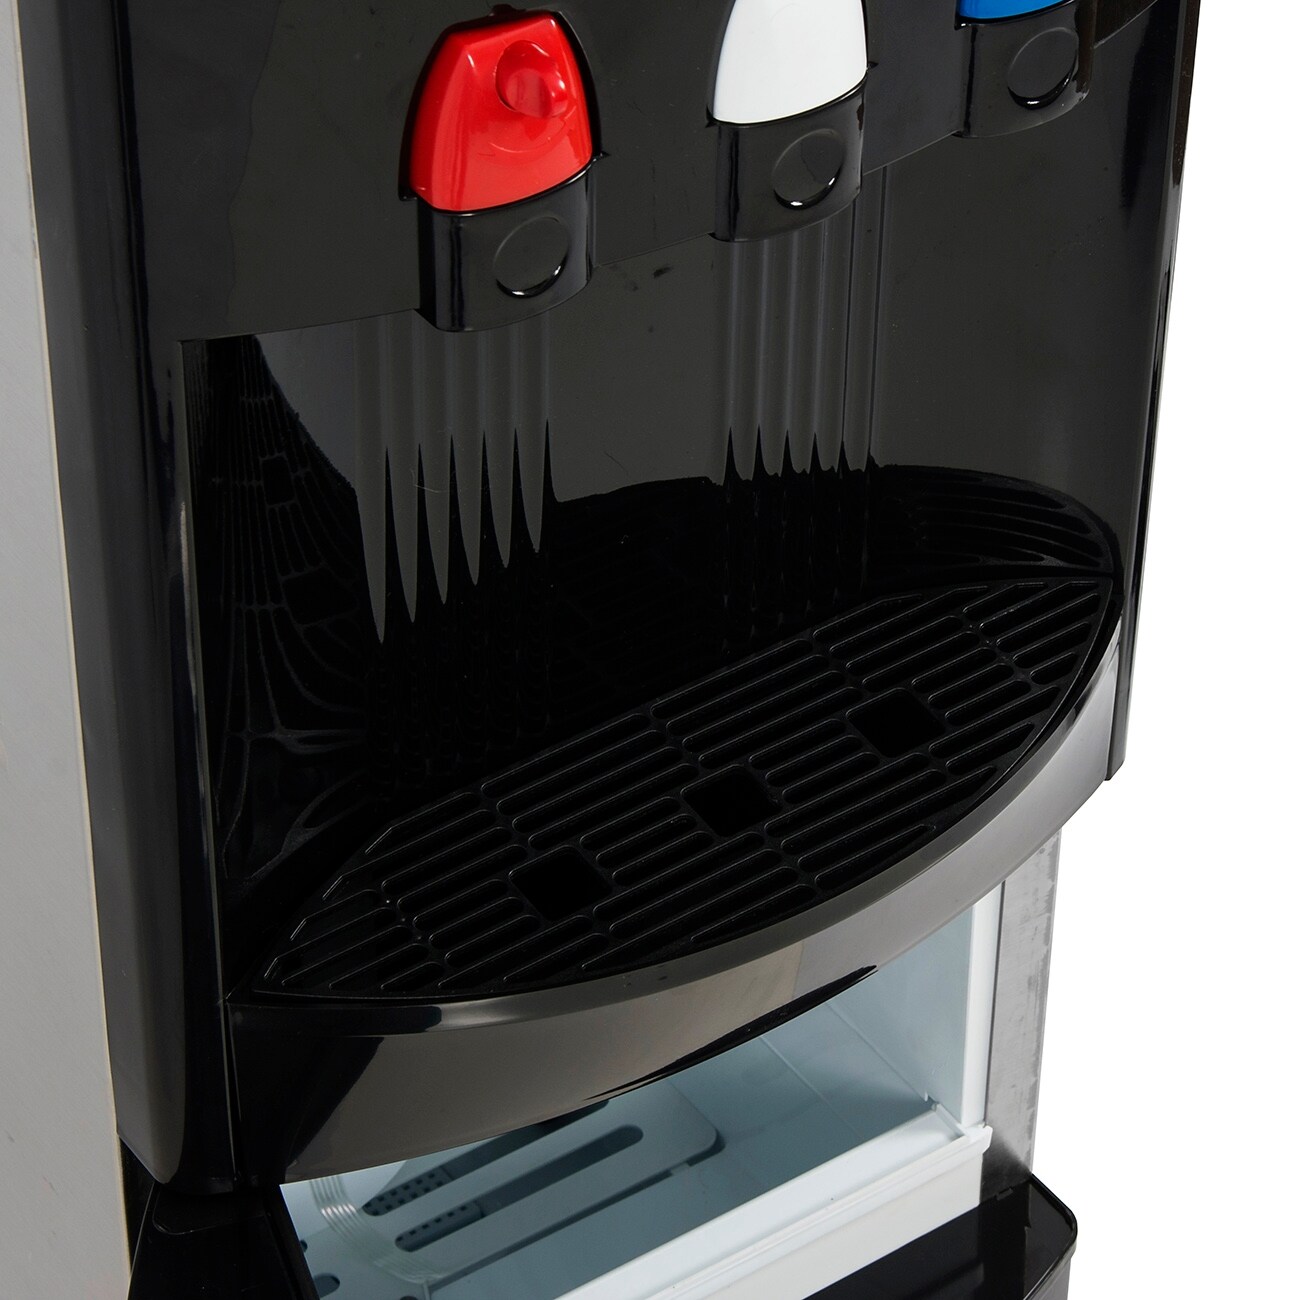 Household Ice Warm Hot Quiet Freestanding Water Cooler Dispenser - Bed Bath  & Beyond - 31415181